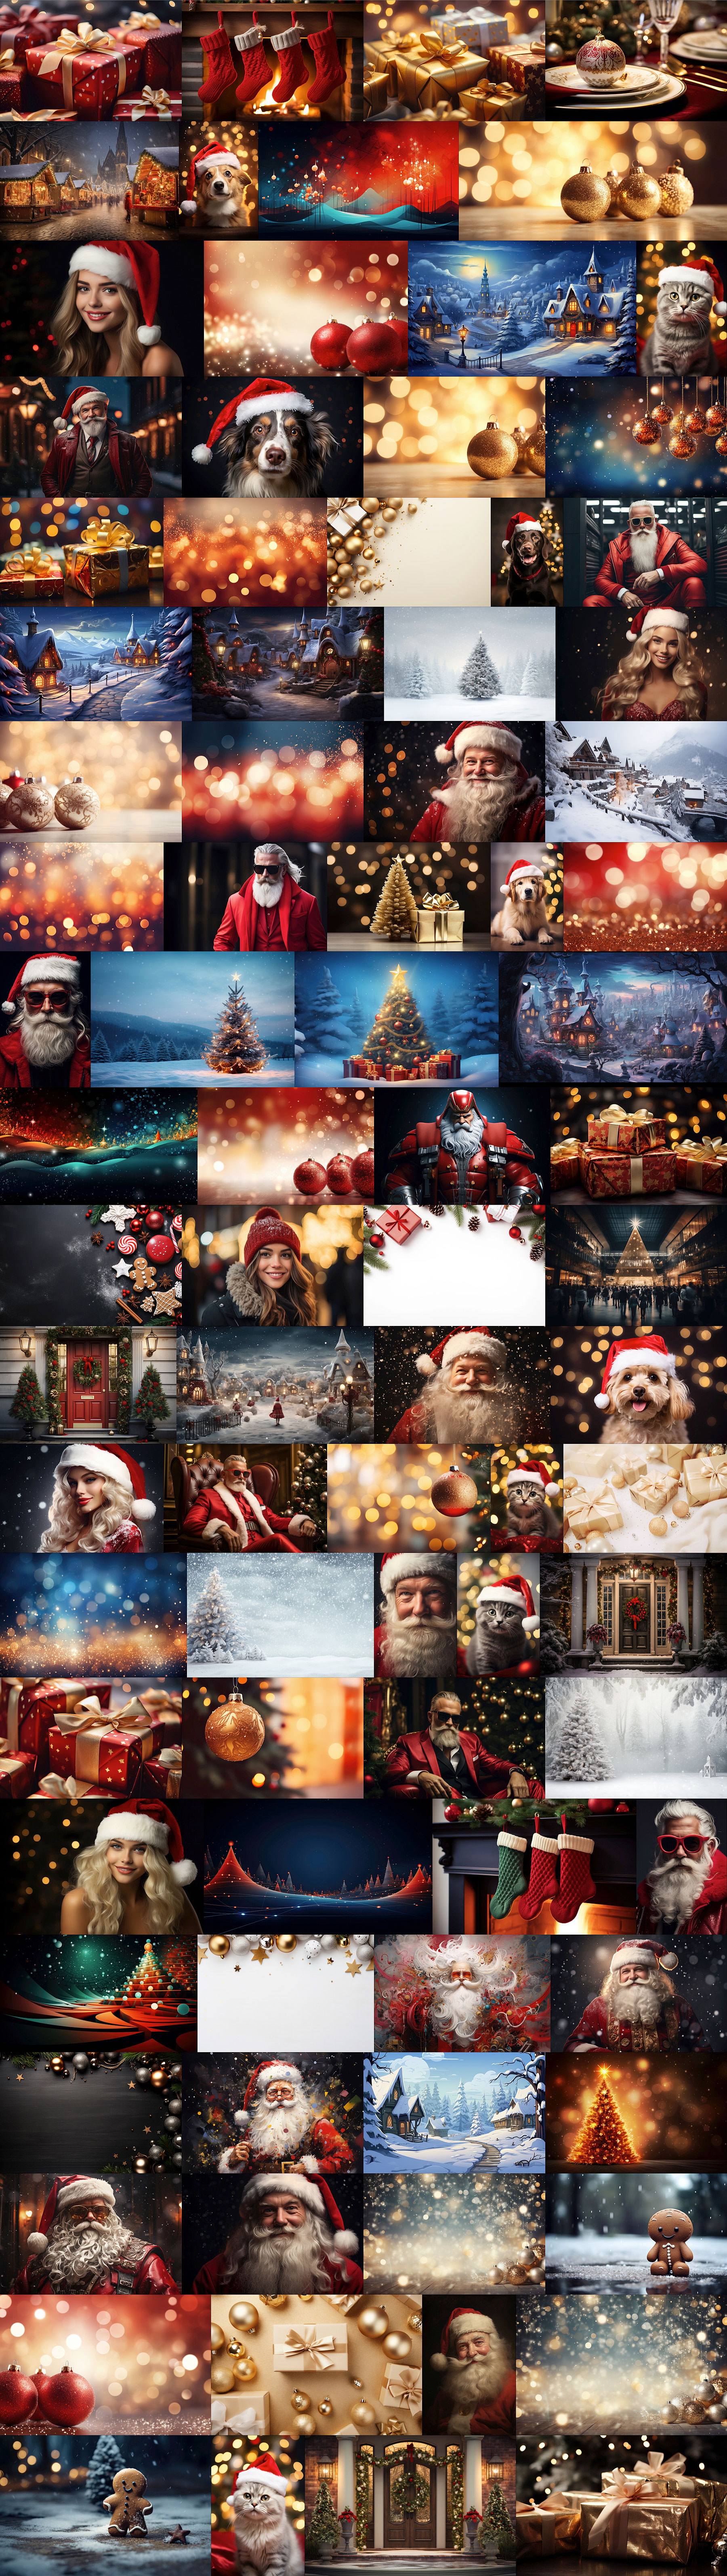 ai-christmas-wonderland-all-photos.jpg